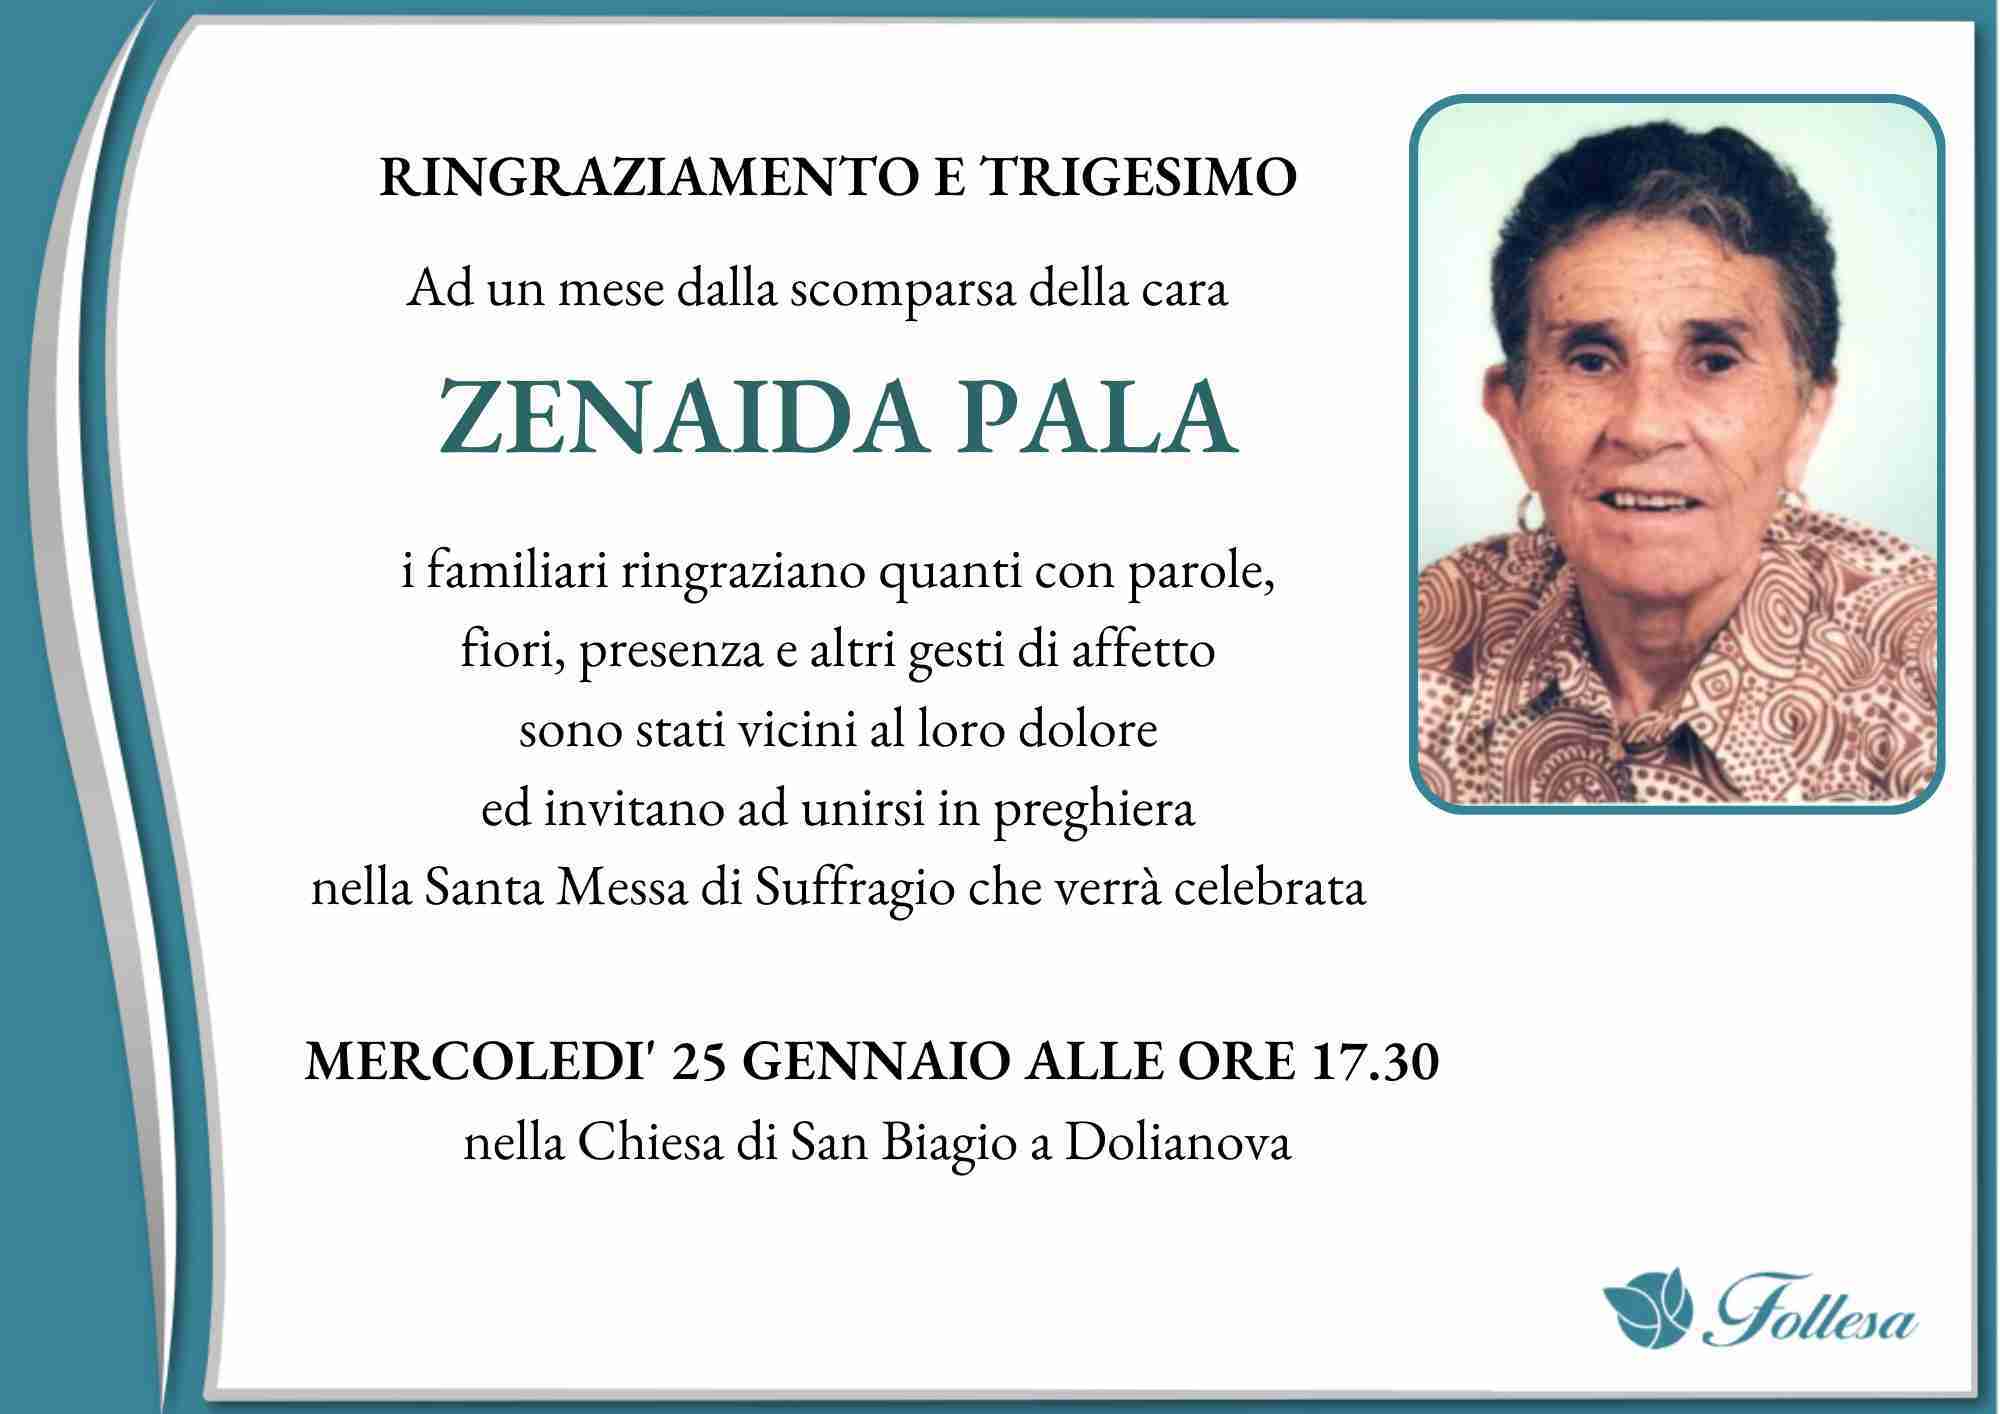 Zenaida Pala